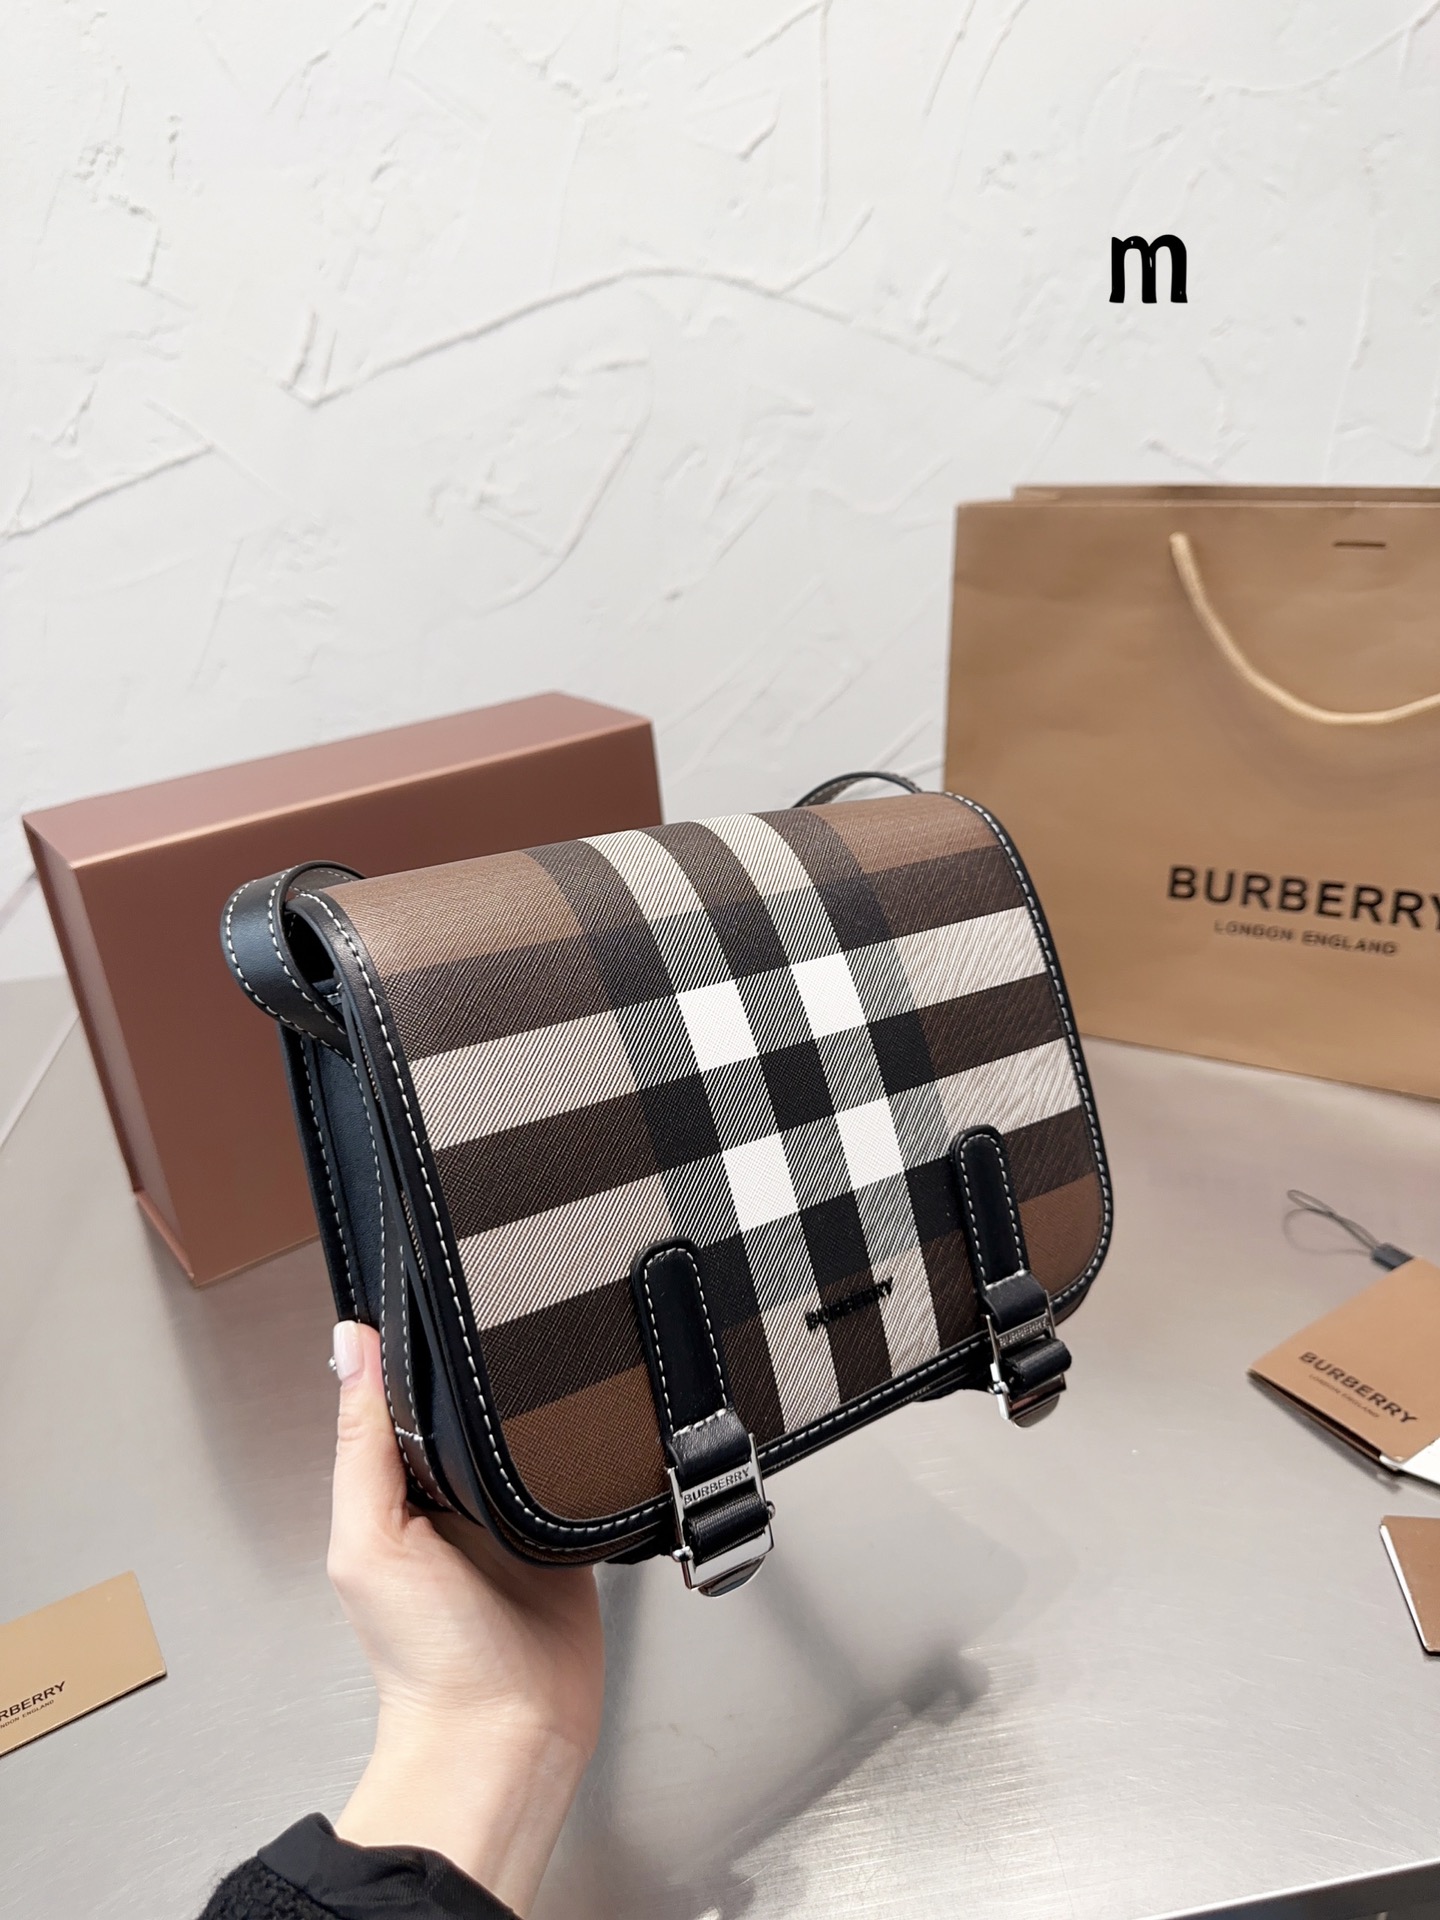 Burberry messenger bag stitching bag